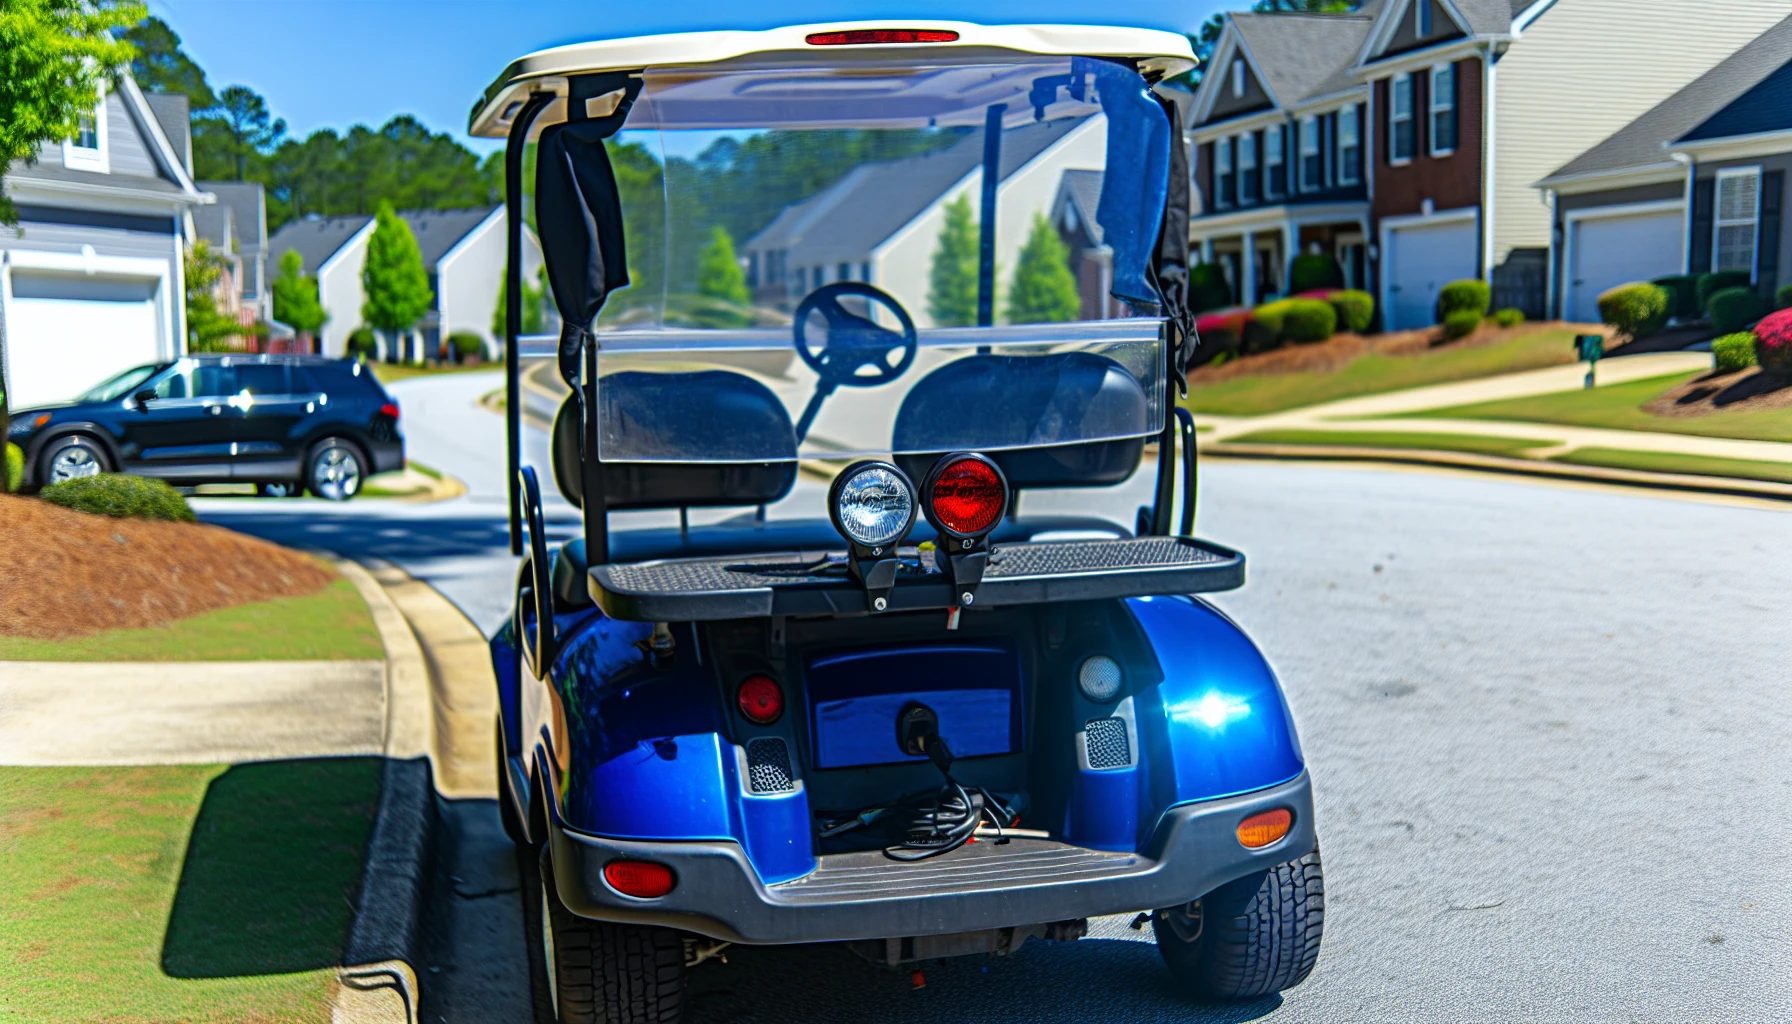 Street-legal golf cart with brake lights